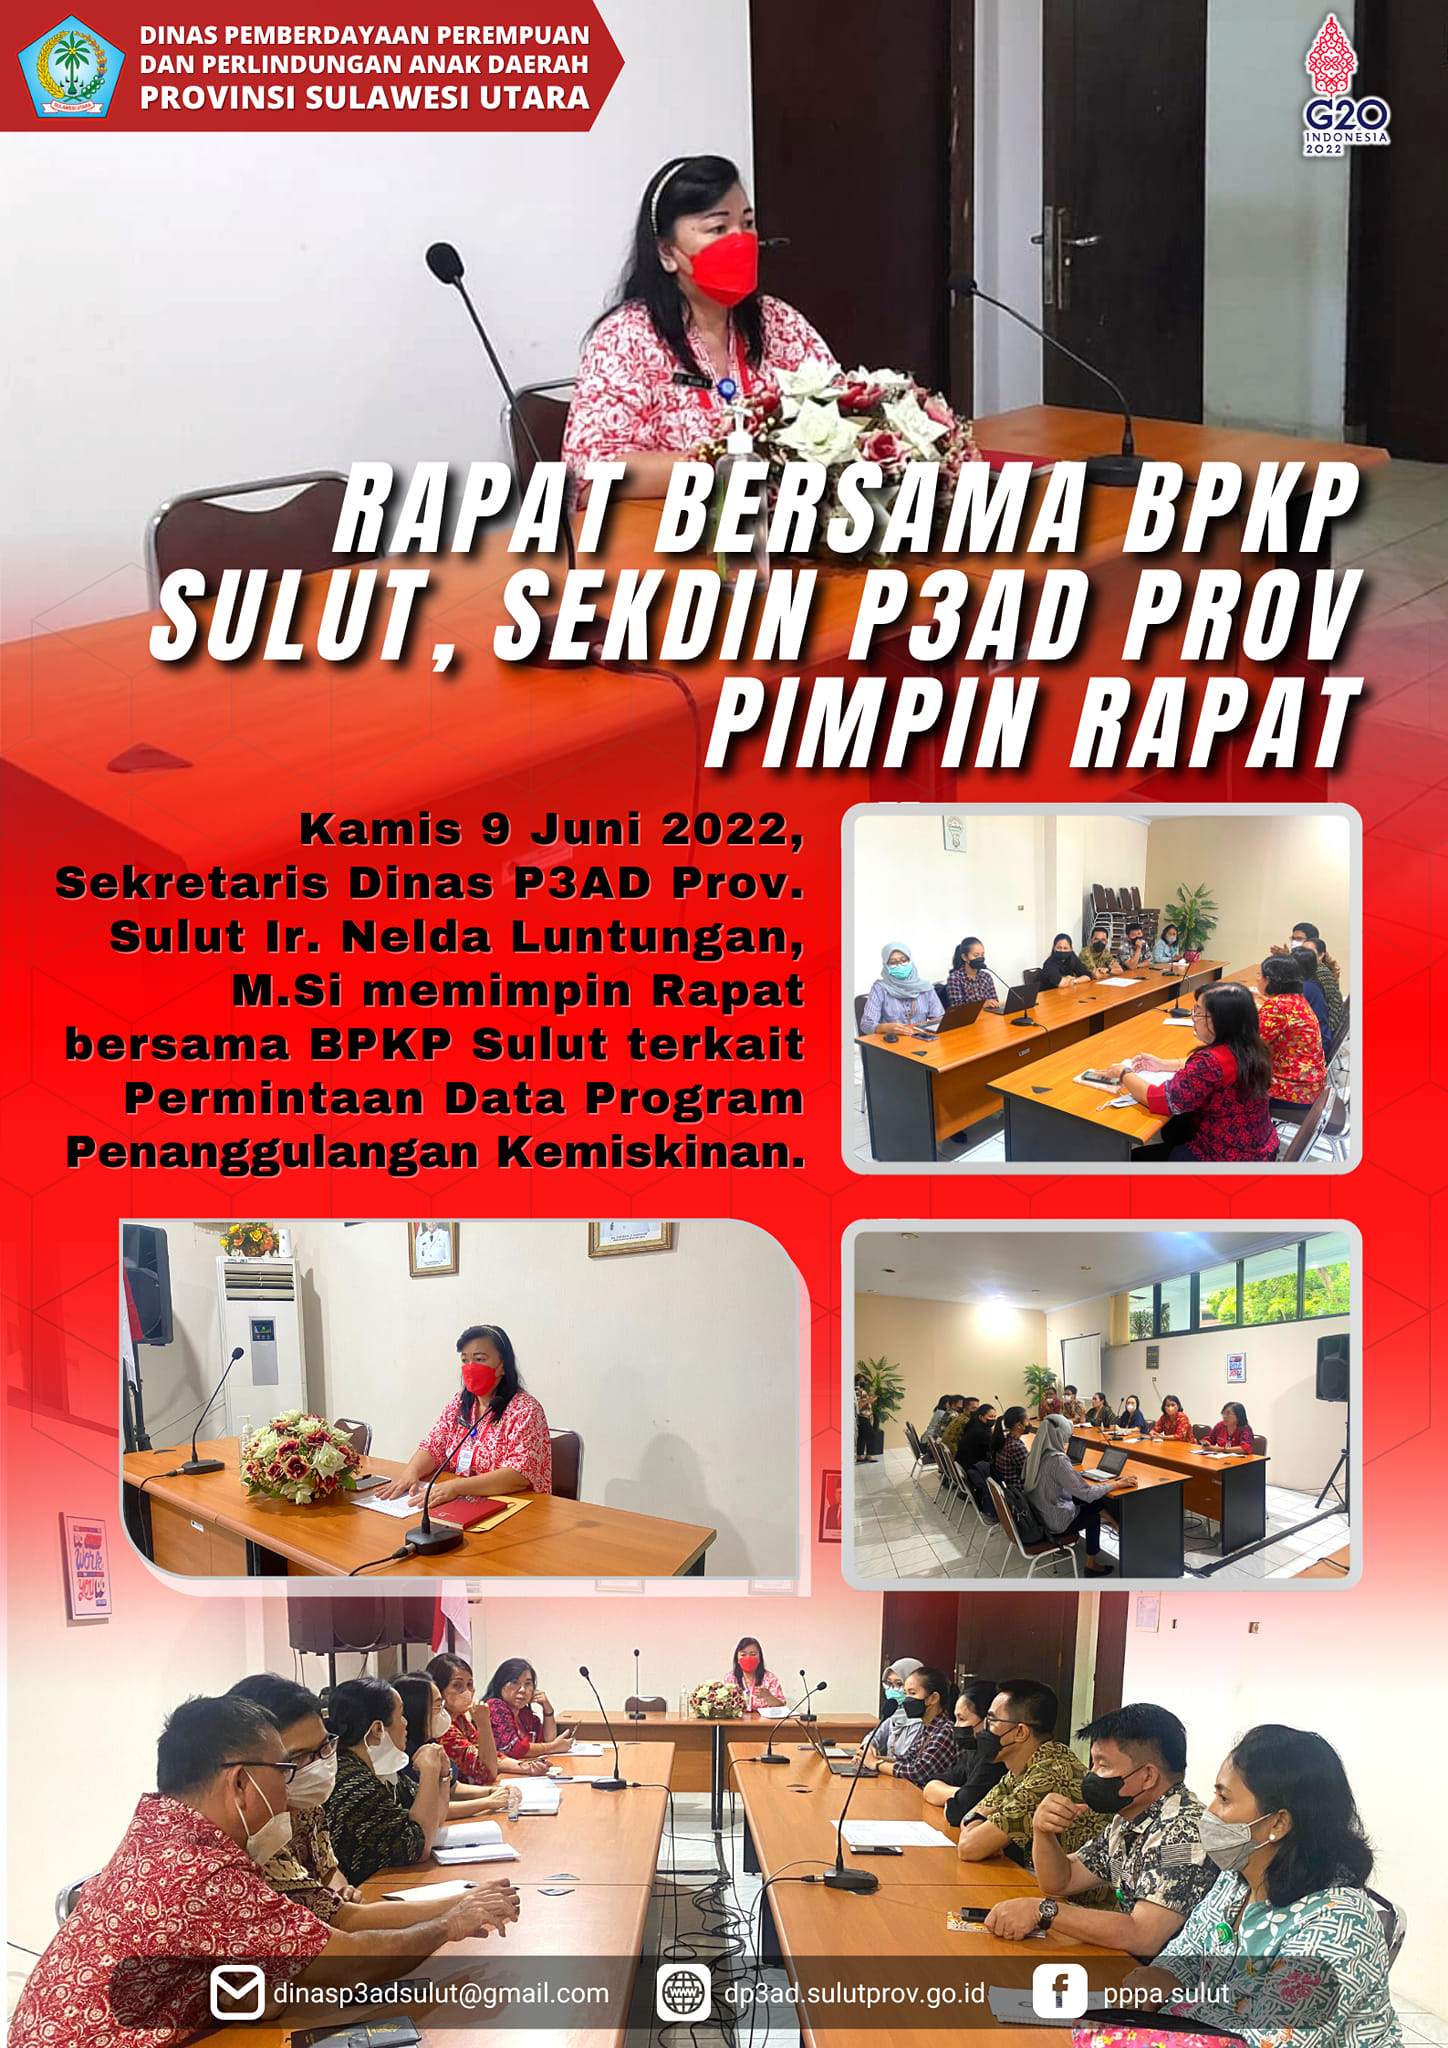 Rapat Bersama BPKp Sulut, Sekdin P3AD Prov. Pimpin Rapat